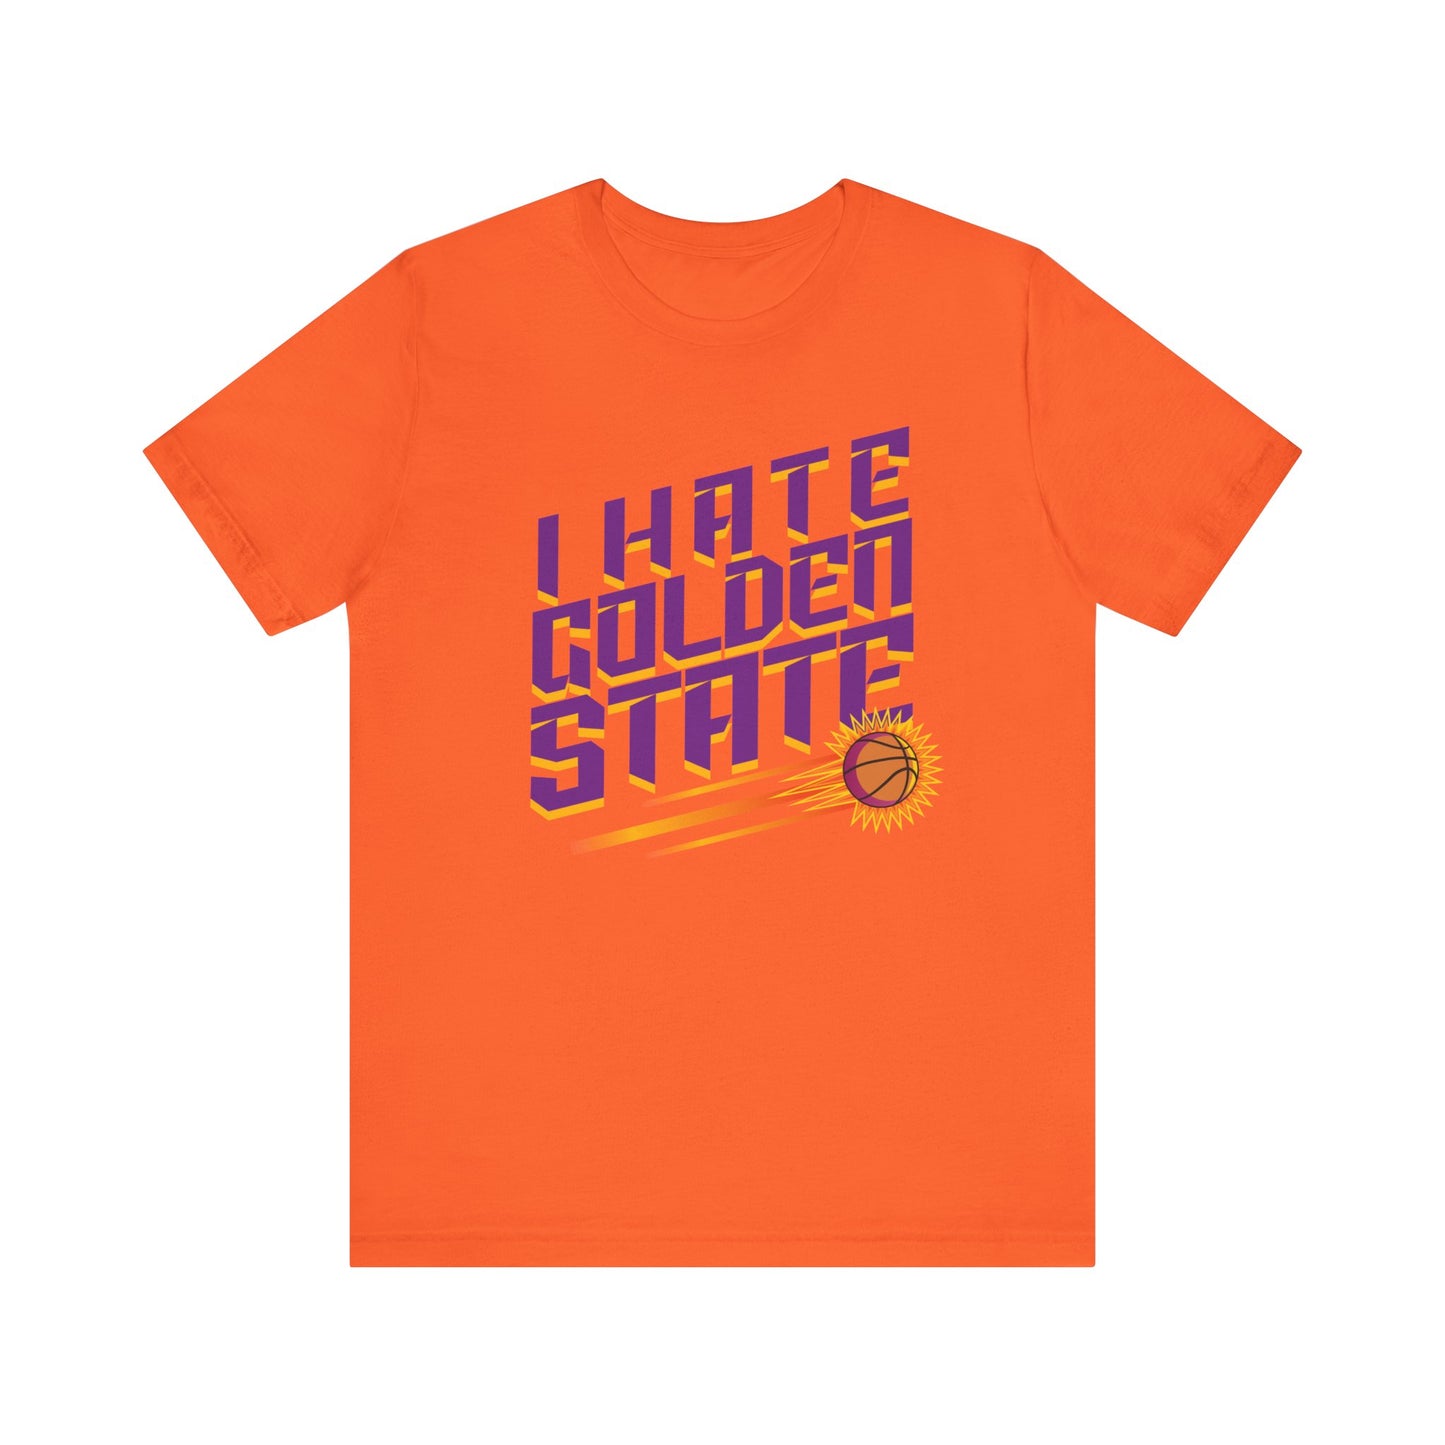 I Hate Gold En State (for Phoenix fans) - Unisex Jersey Short Sleeve Tee